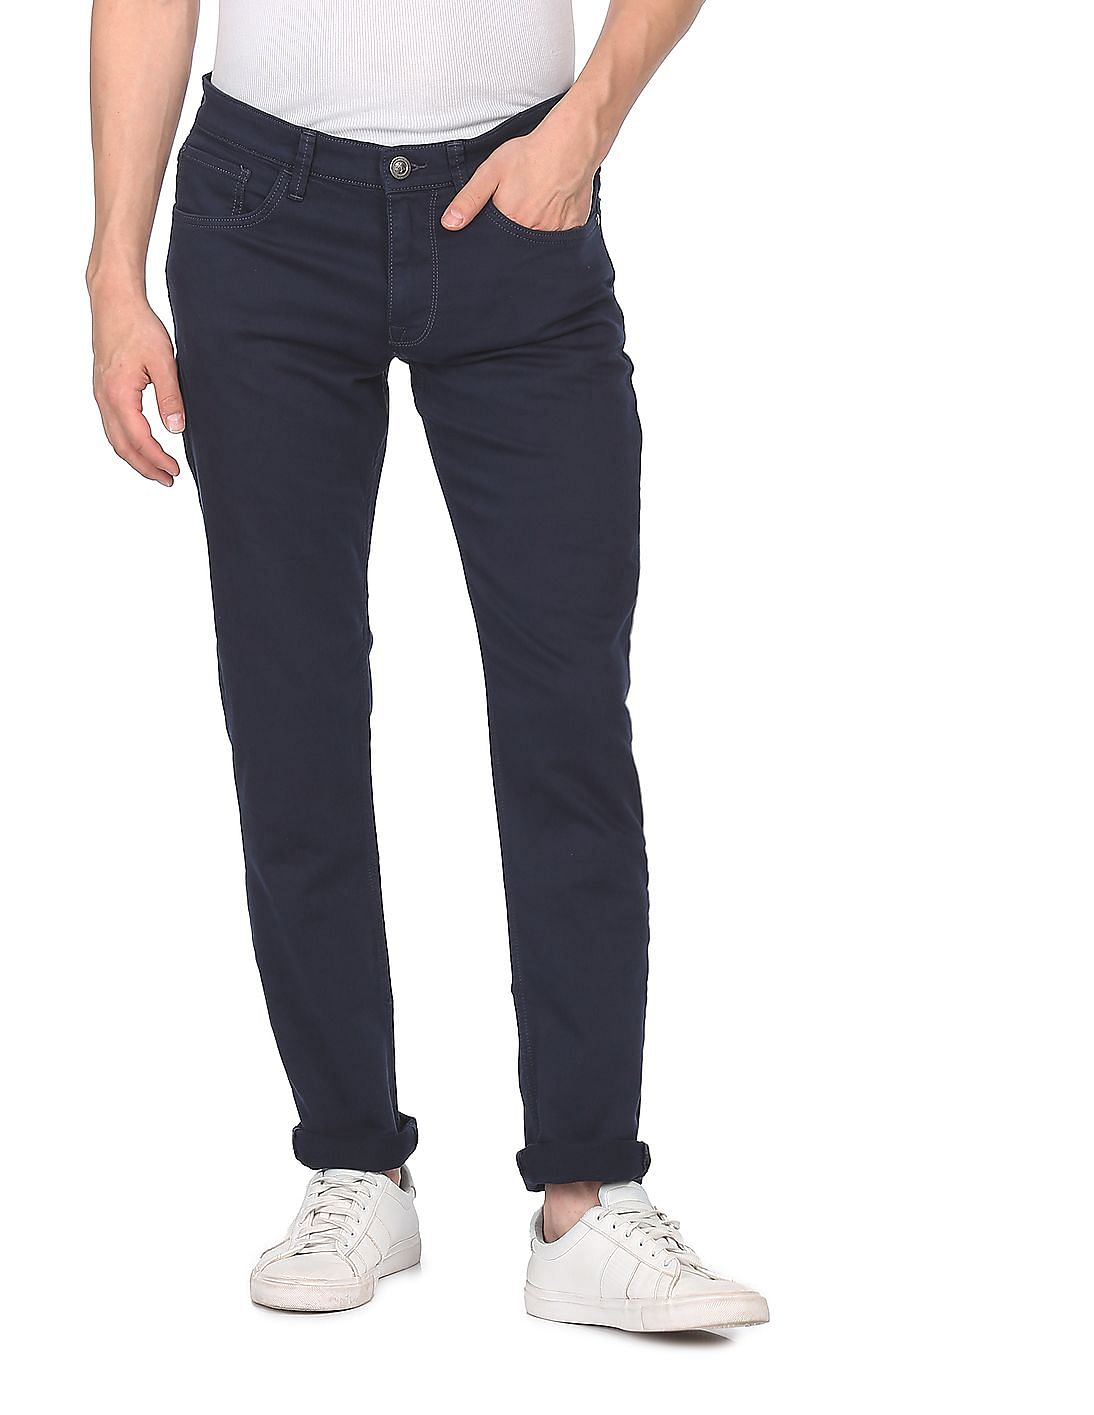 Buy Arrow Jameson Slim Fit Clean Look Jeans - NNNOW.com